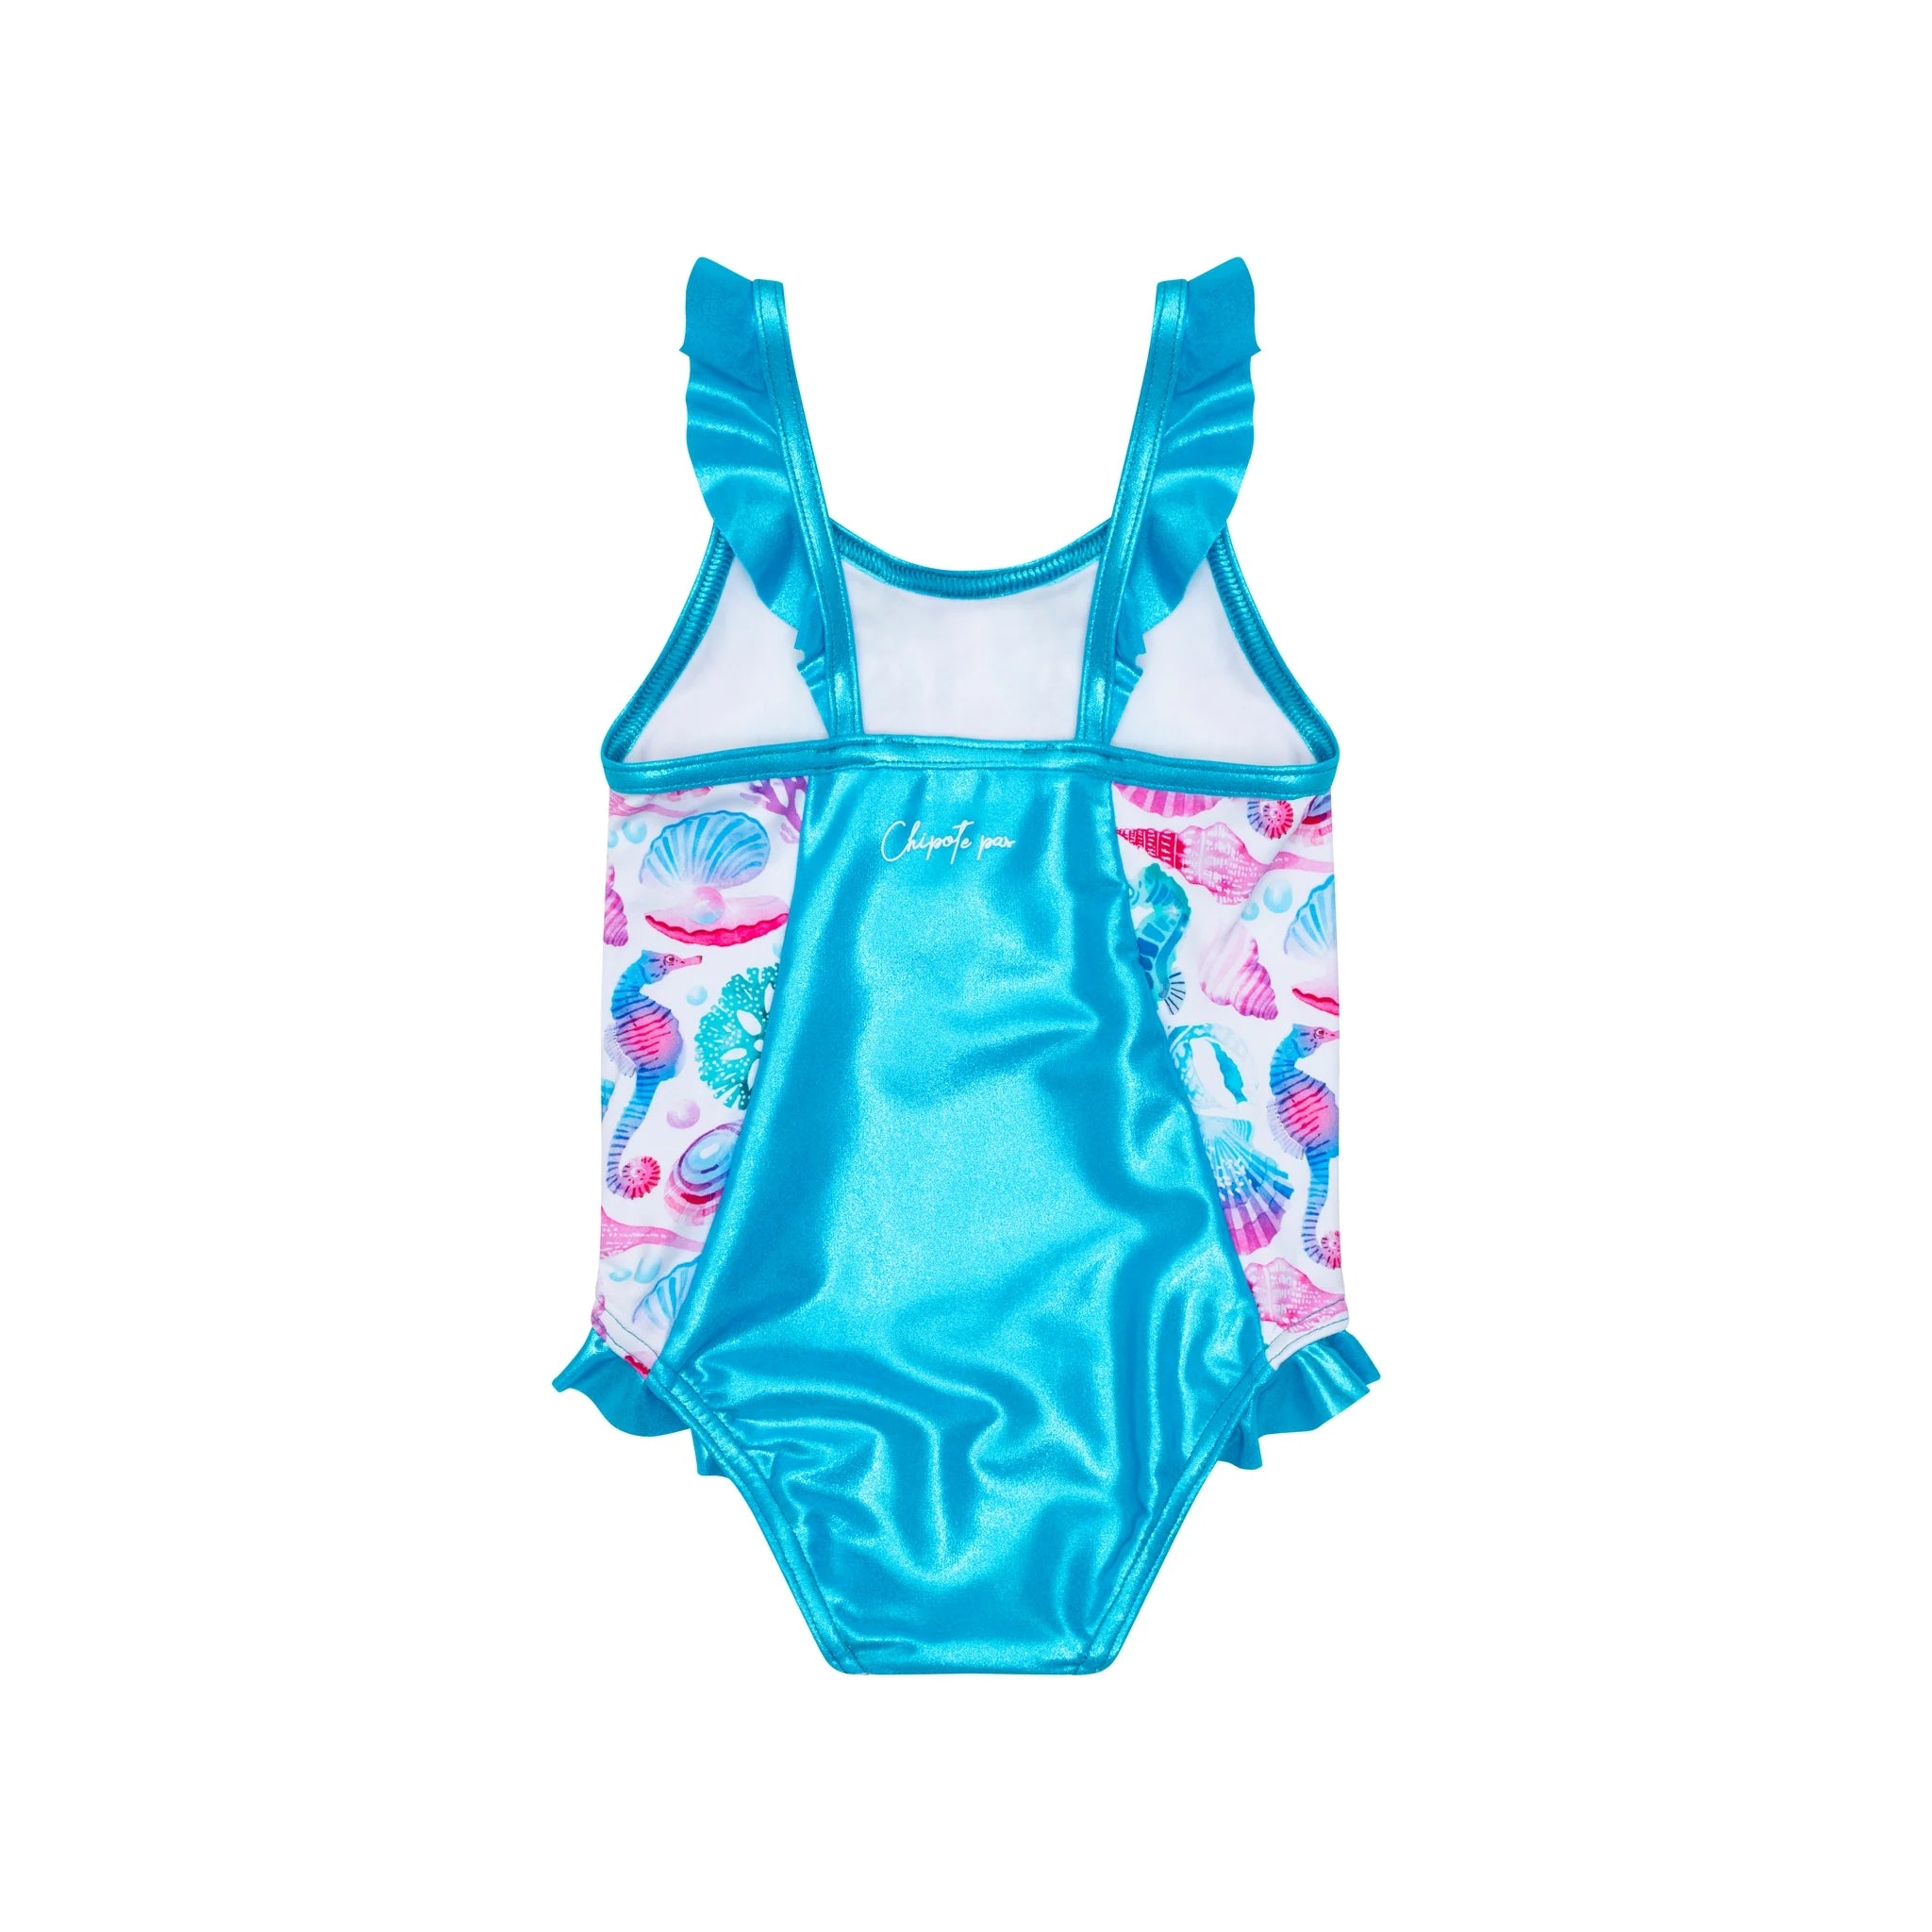 Girls Blue Ruffle Swimsuit